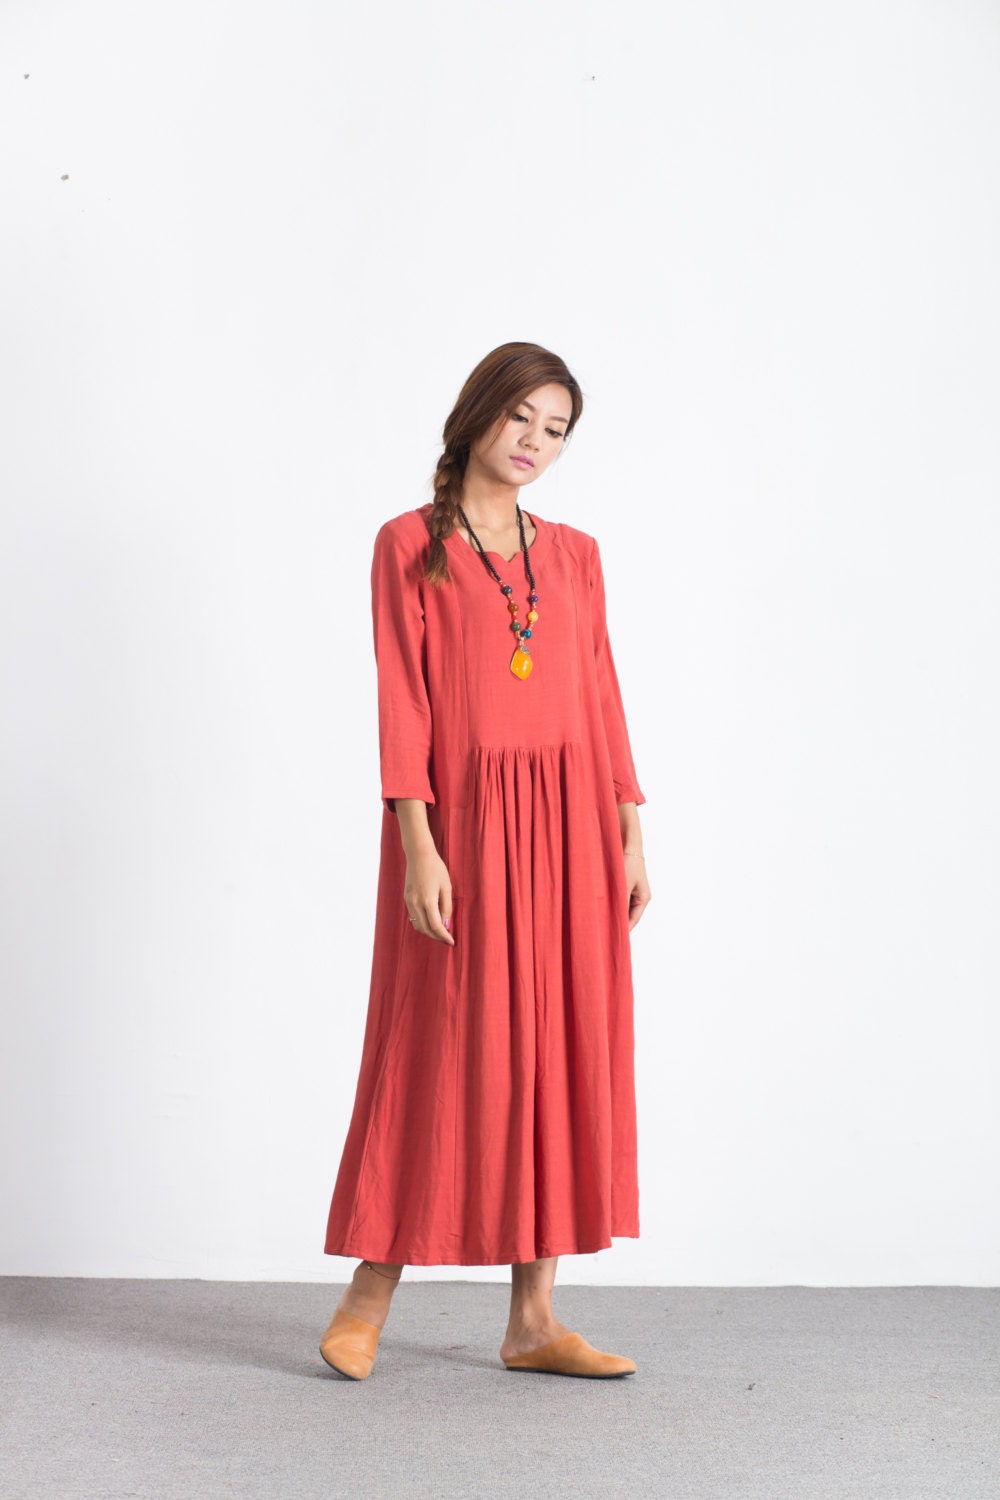 Women's long sleeves maxi dress linen cotton pullover | Etsy